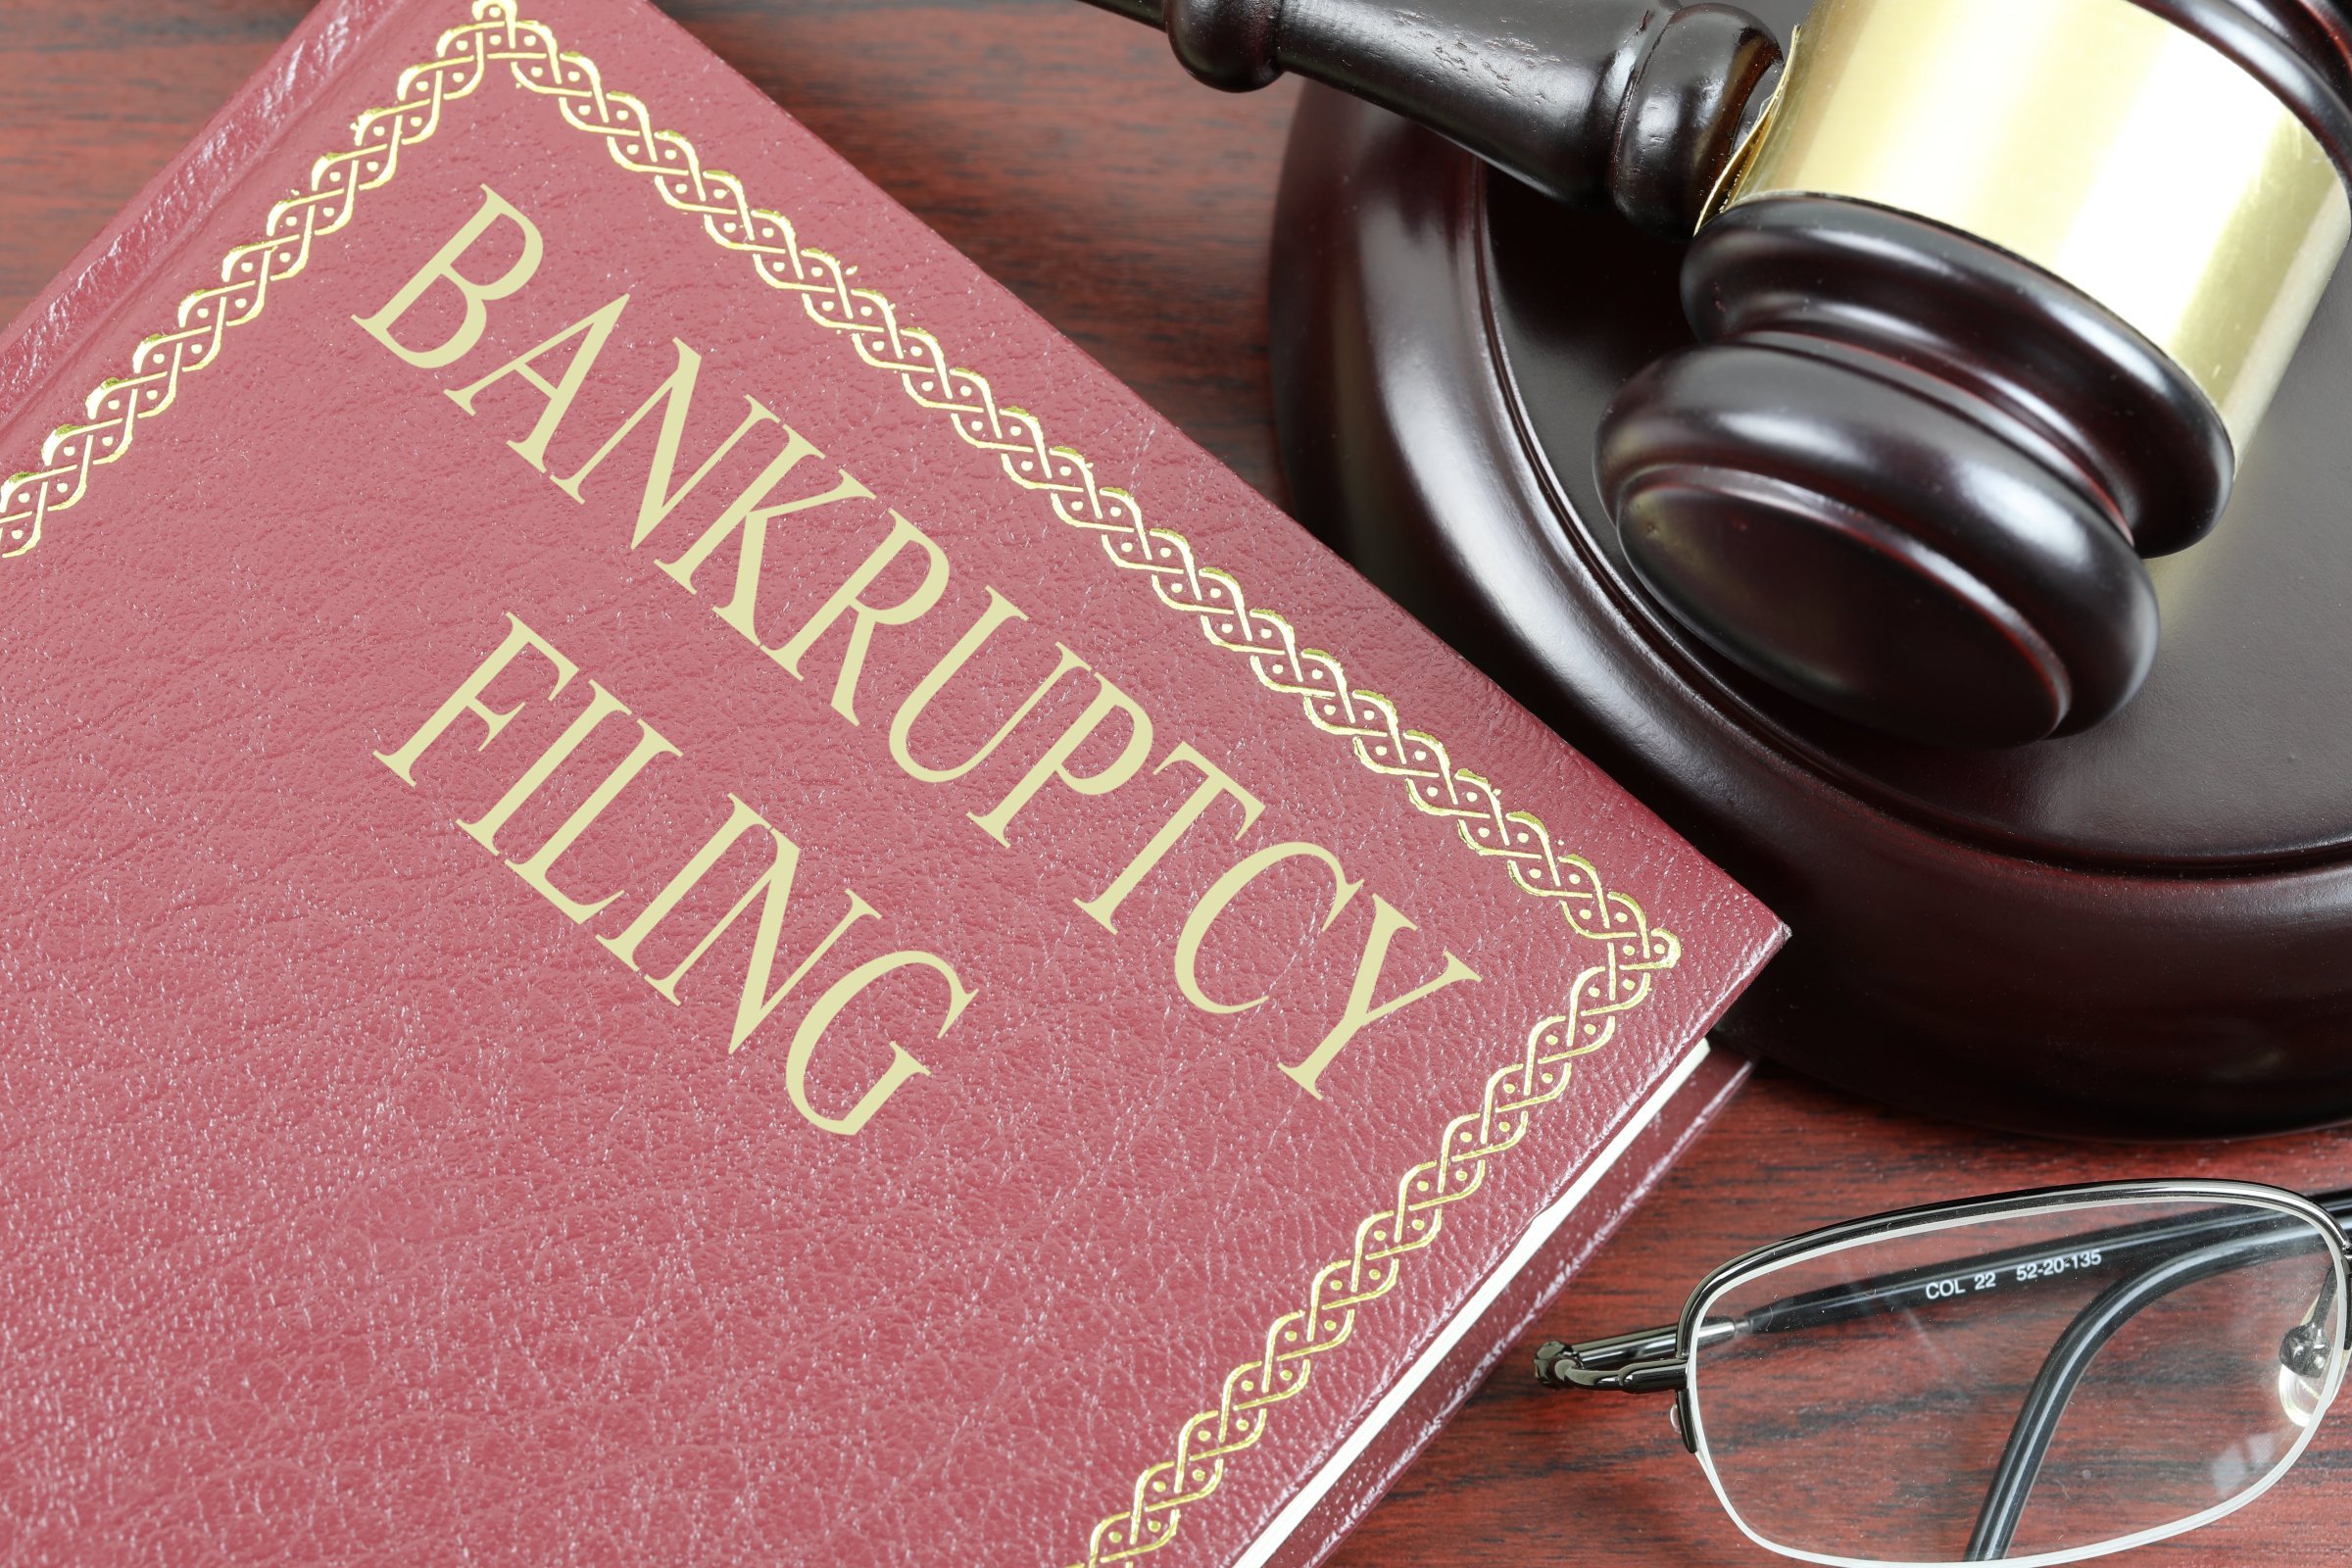 bankruptcy filing